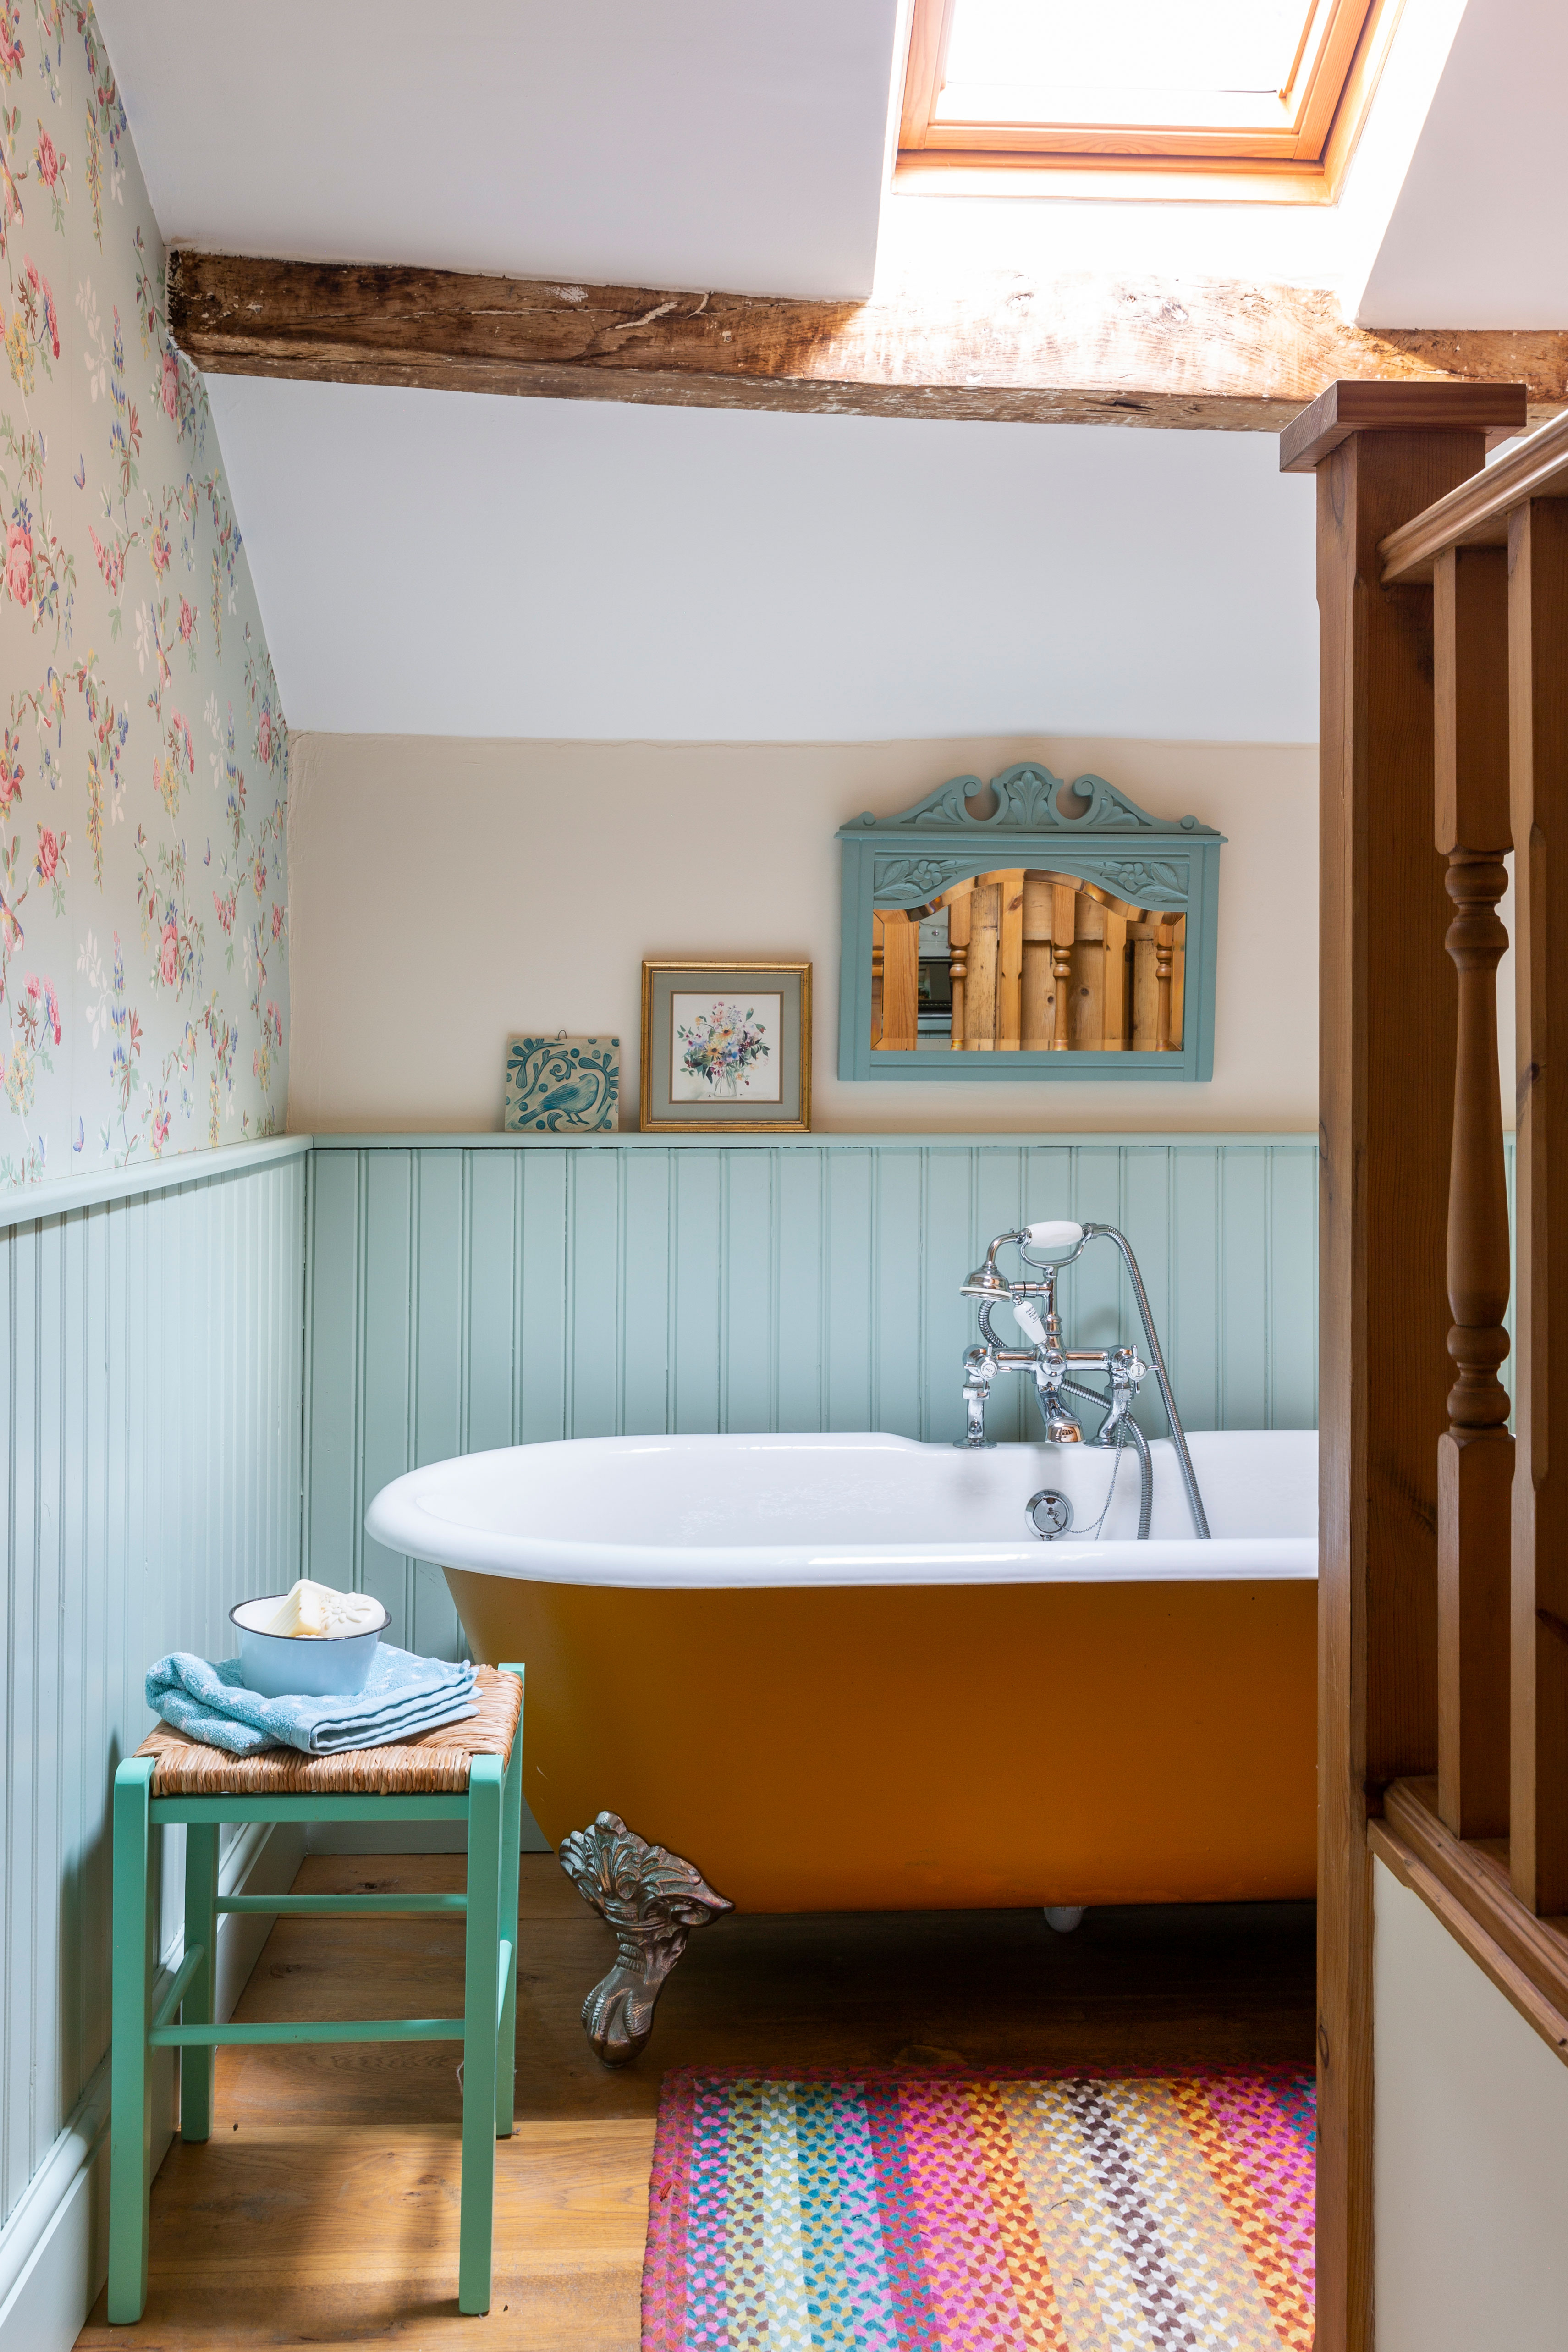 Traditional Bathroom Ideas 20 Ways To, Classic Bathroom Renovation Ideas